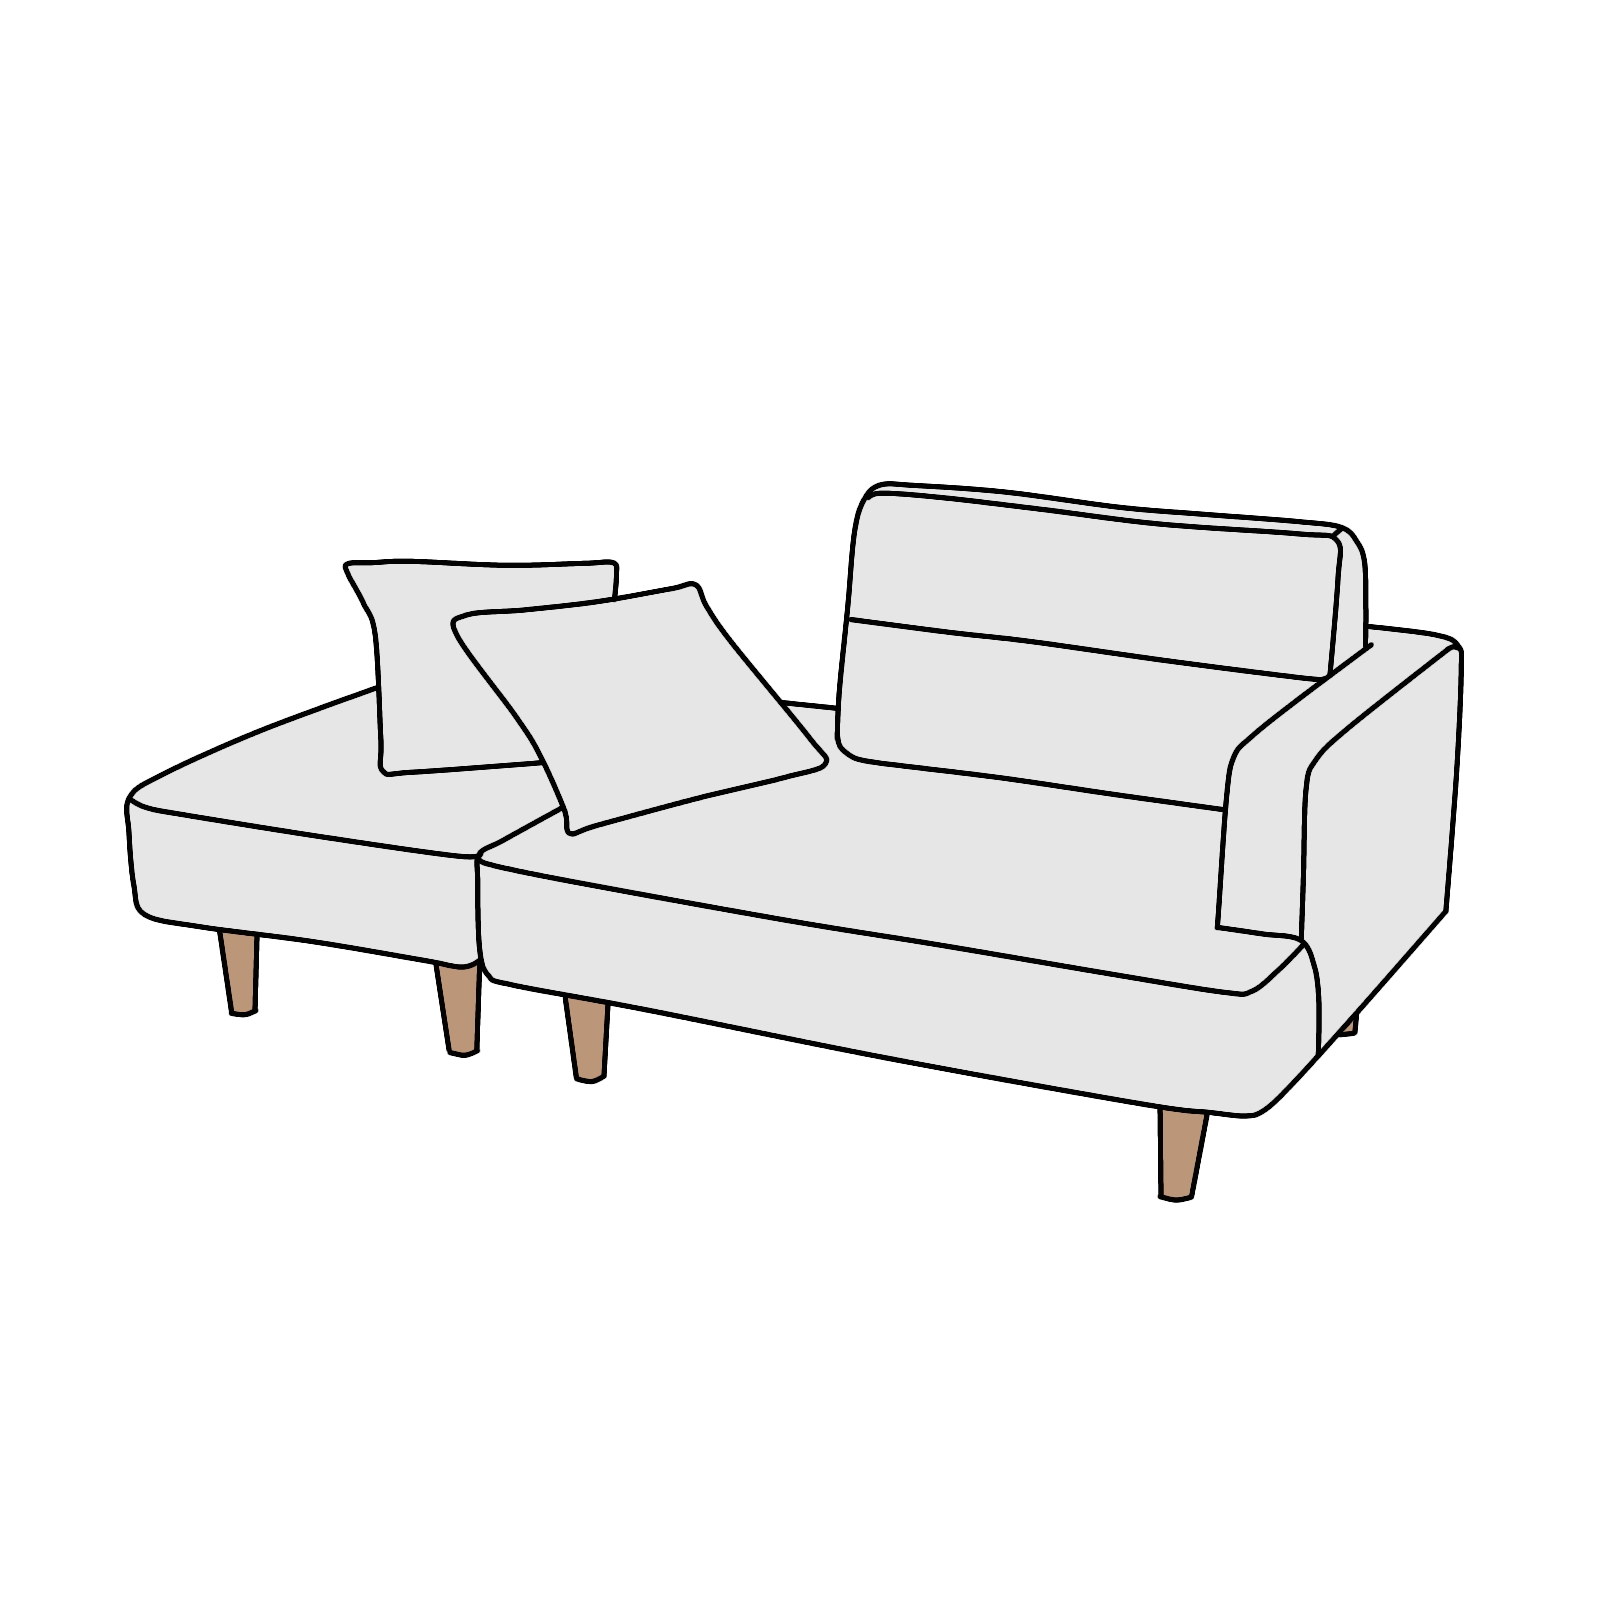 NAP waraku compact couch sofa.jpg